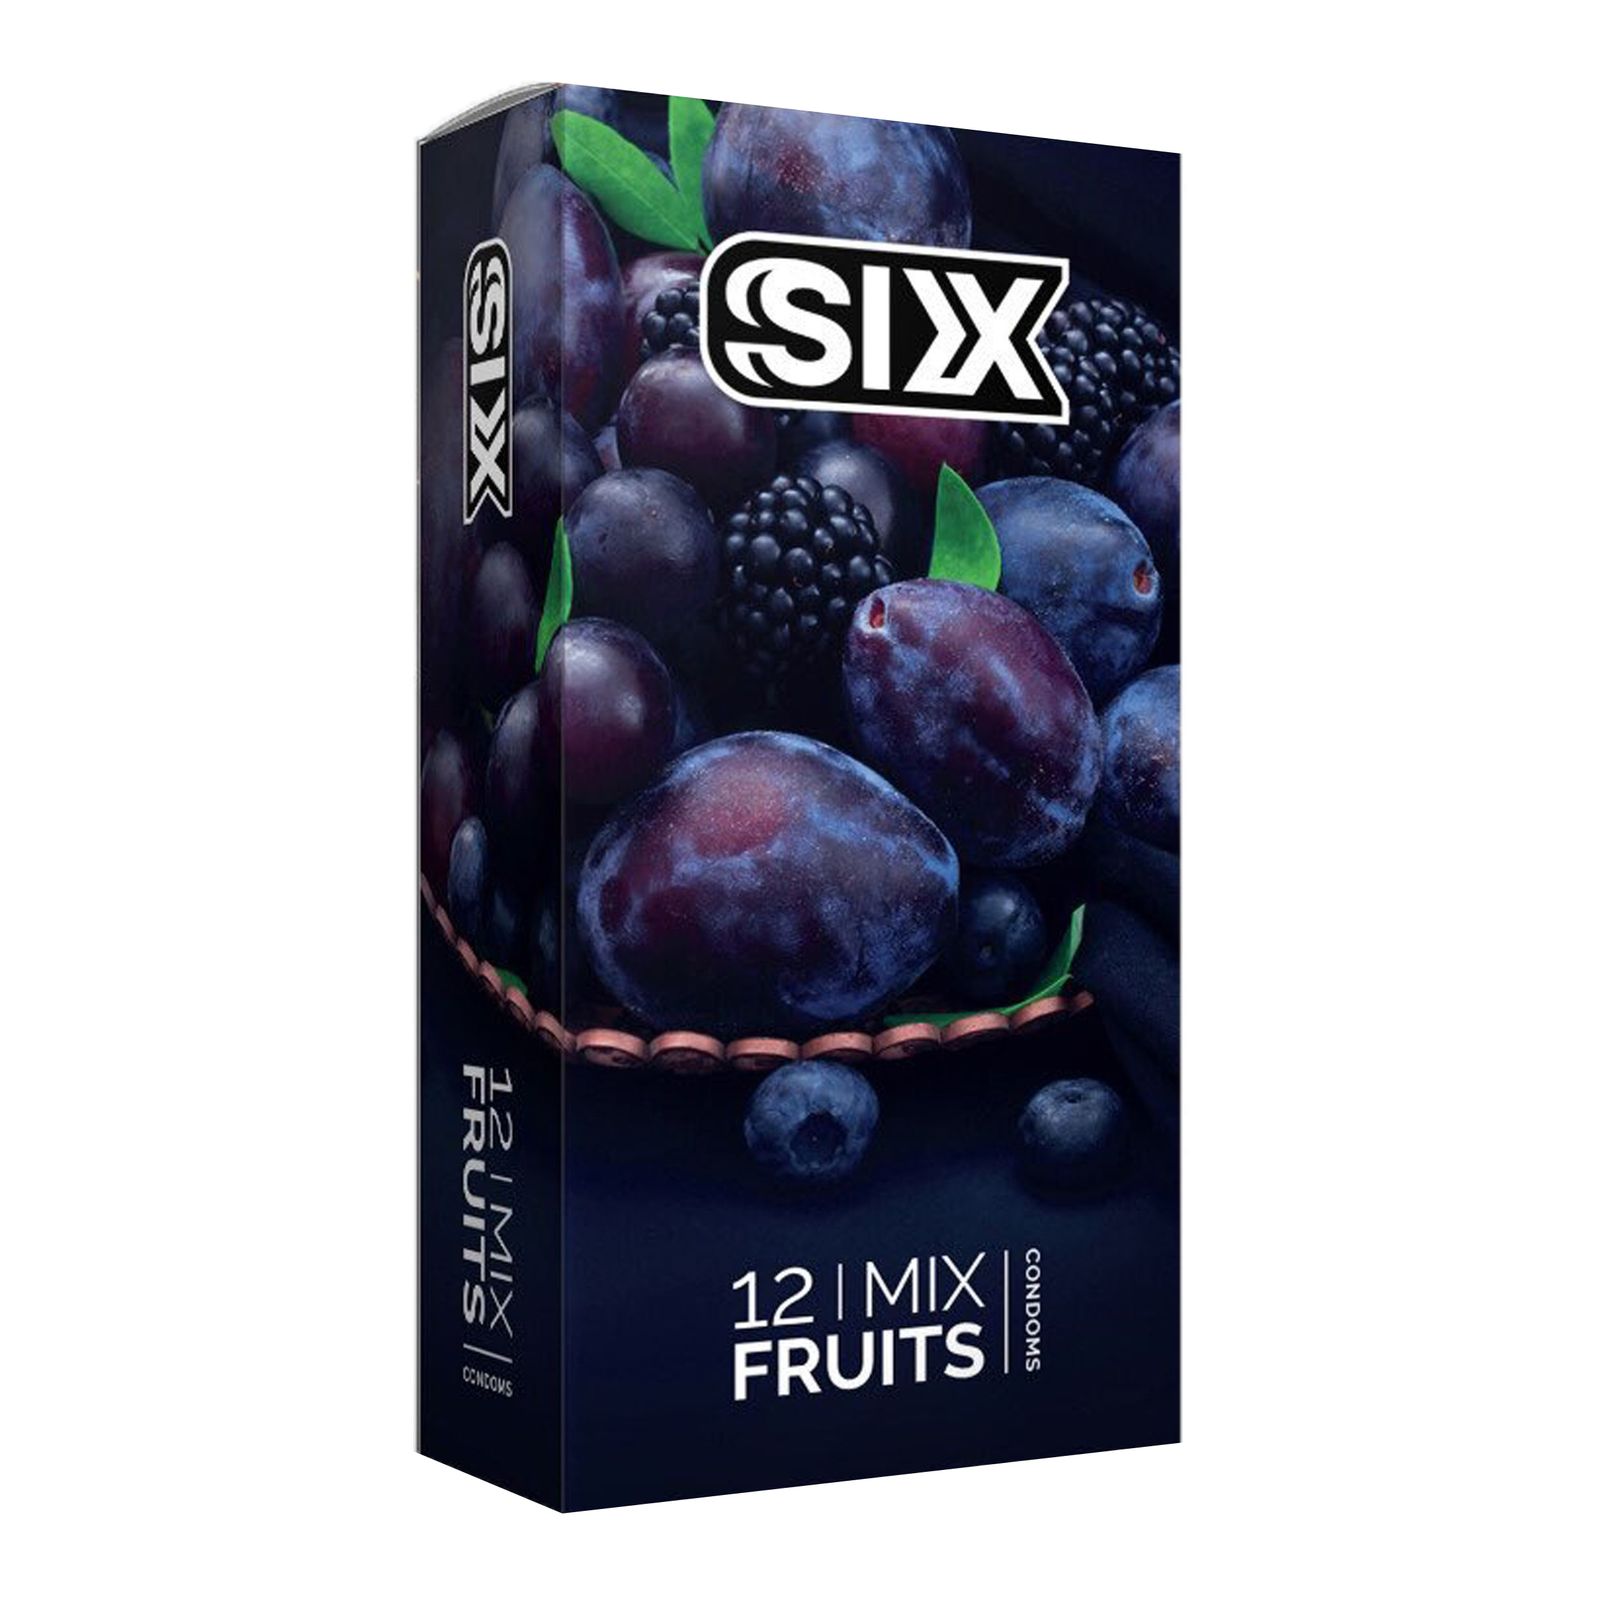 کاندوم سیکس مدل Mix Fruits بسته 12 عددی -  - 1